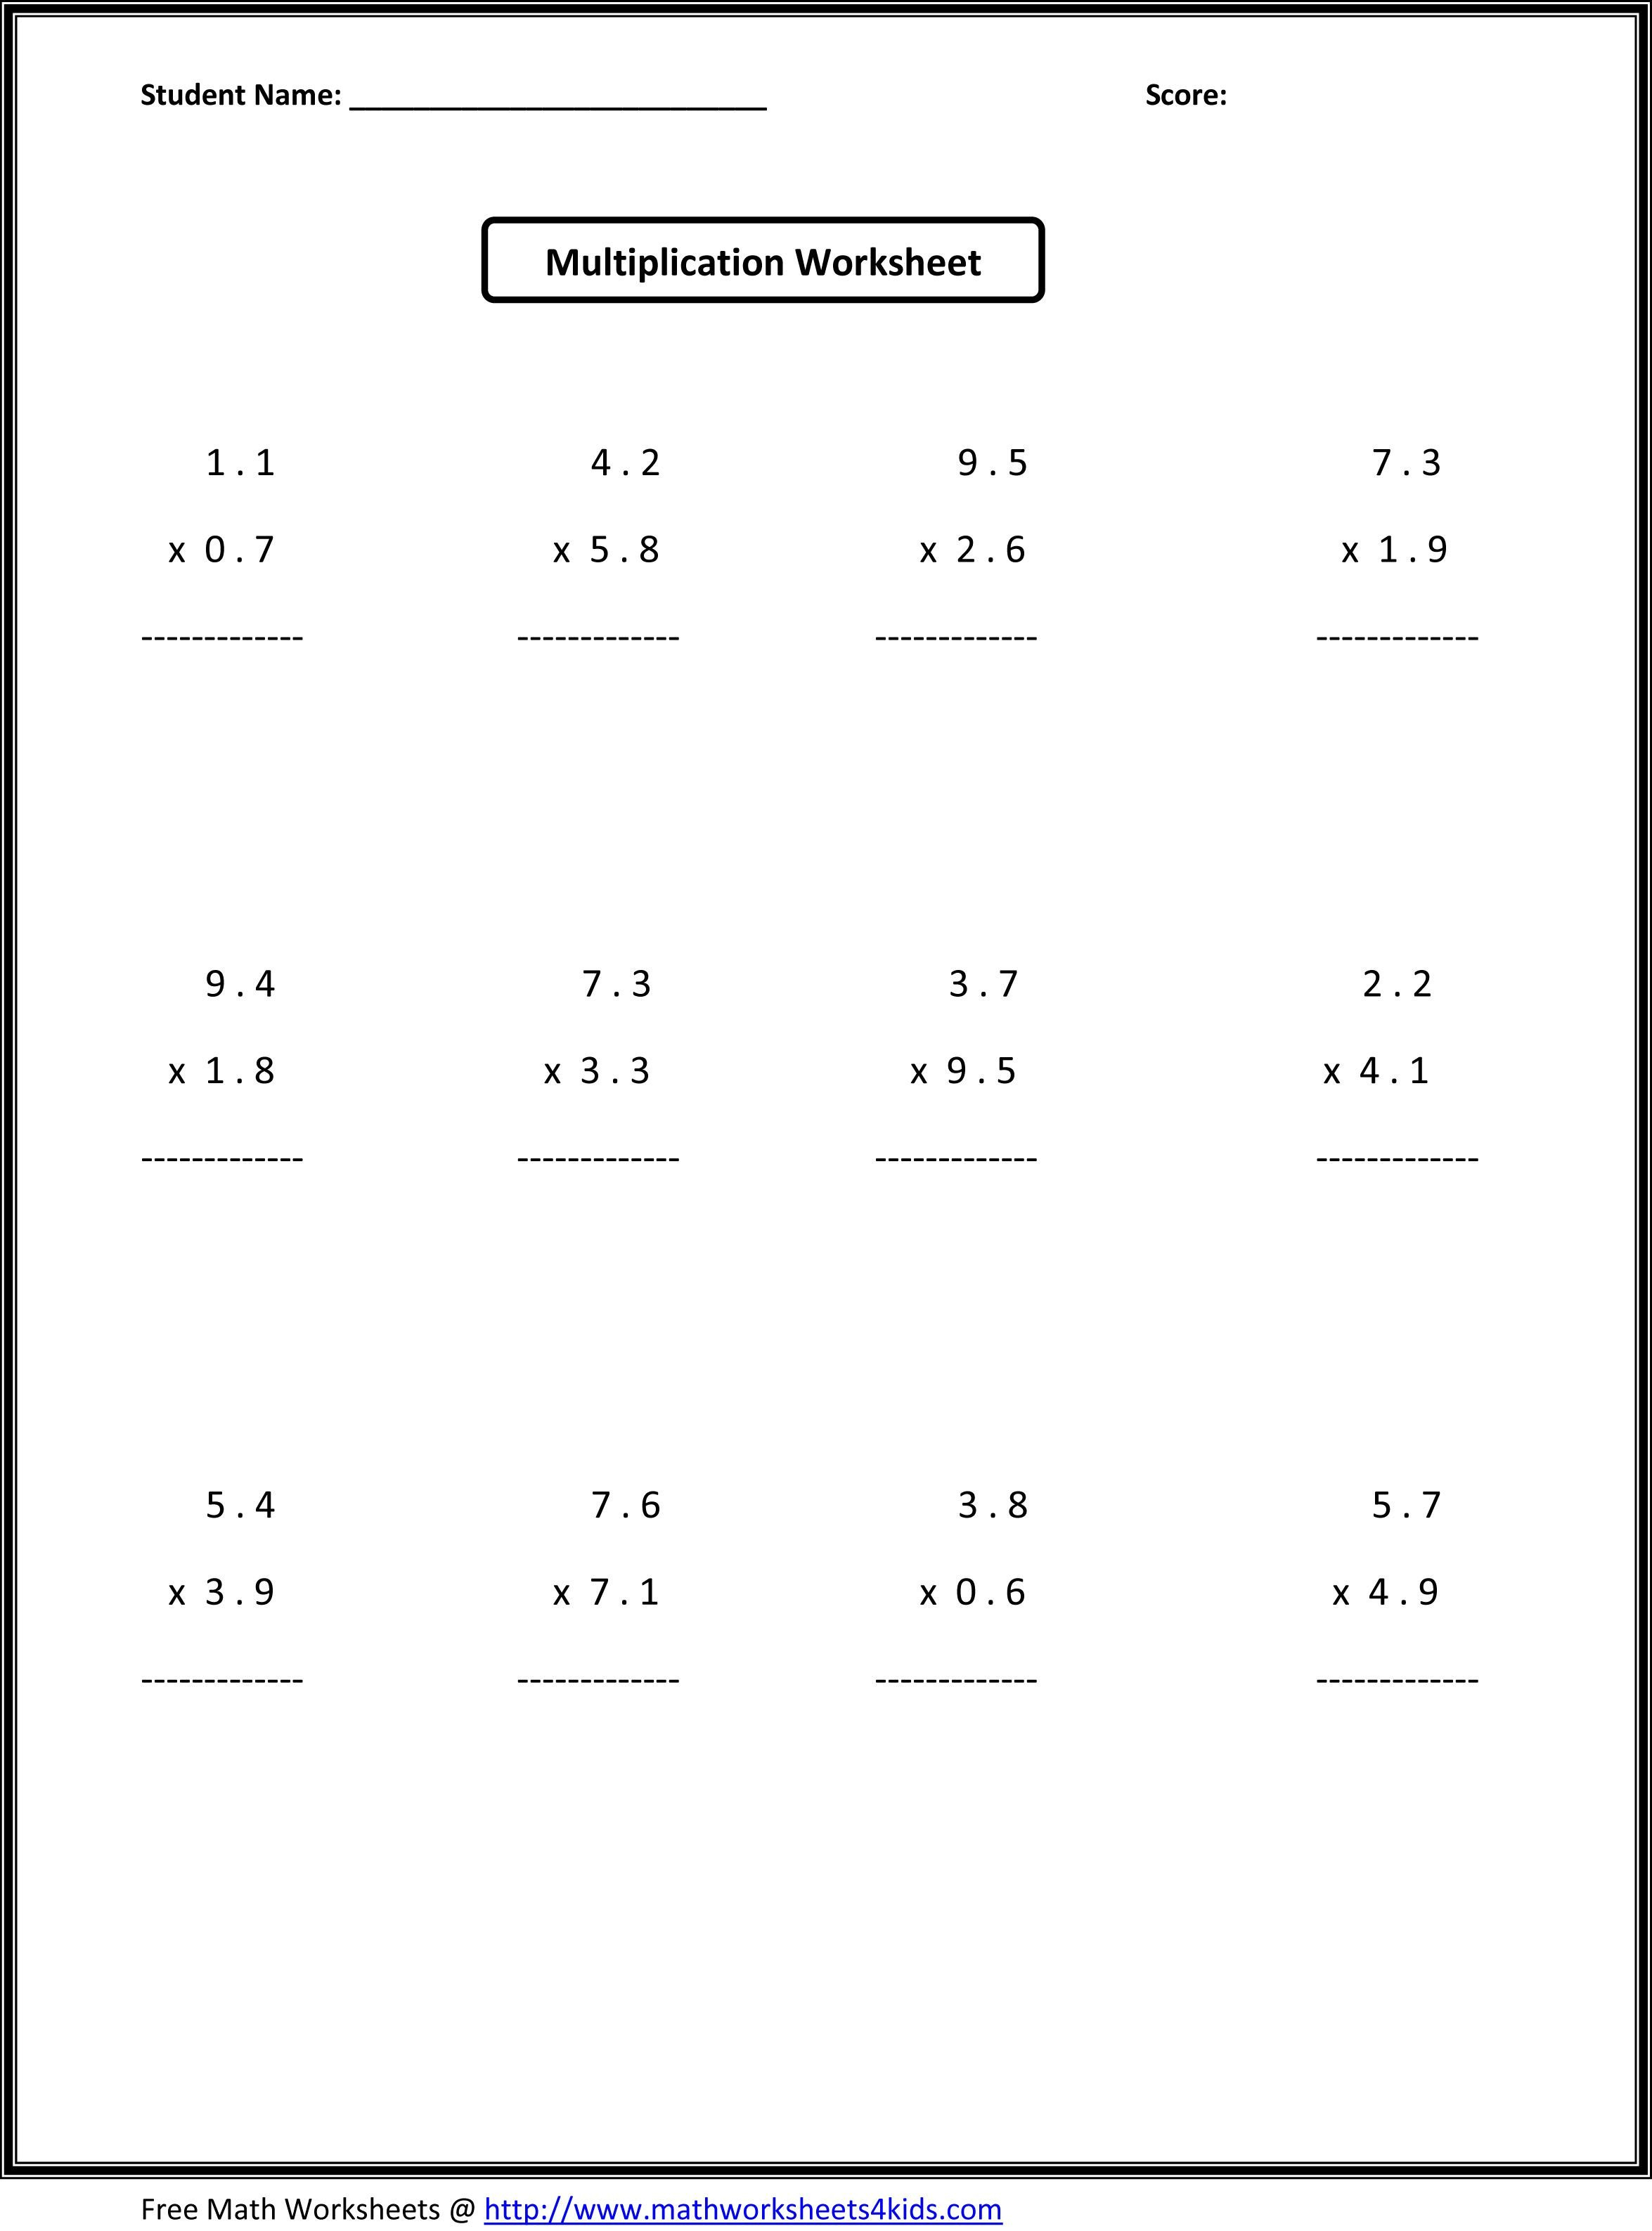 4Th Grade Math Teks Worksheets  Justswimfl For 4Th Grade Math Teks Worksheets